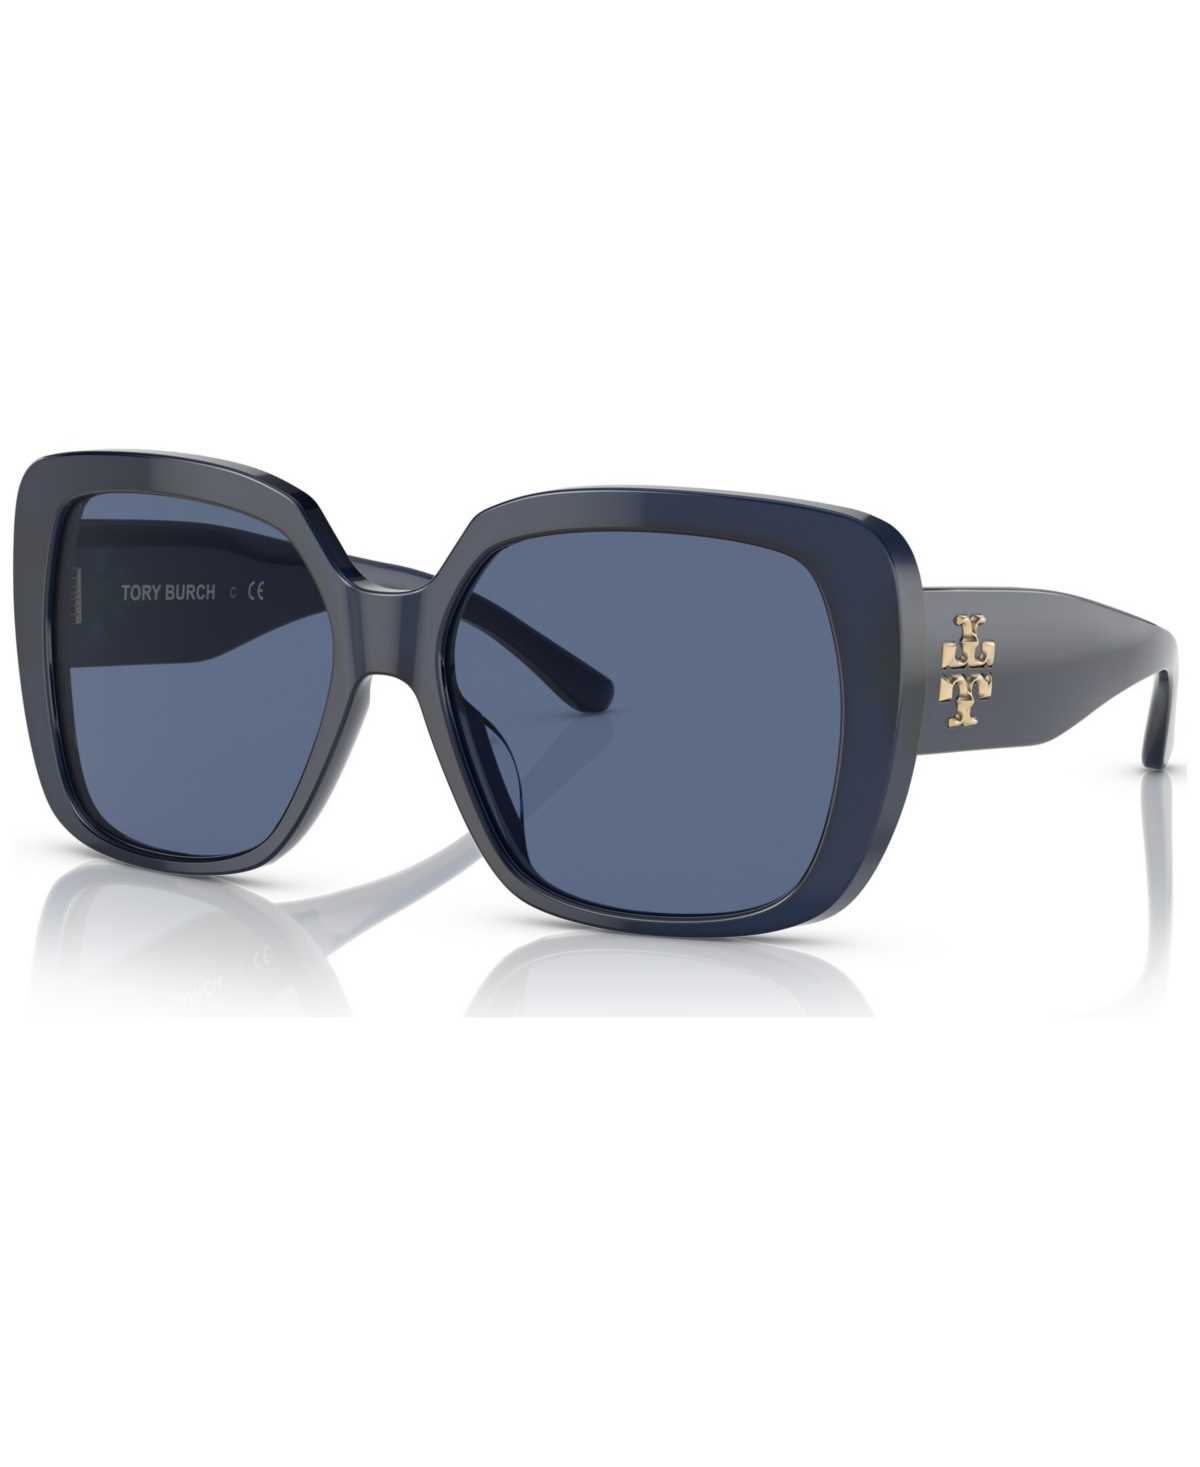 Tory Burch Women's Sunglasses, Ty7112um In Milky Navy